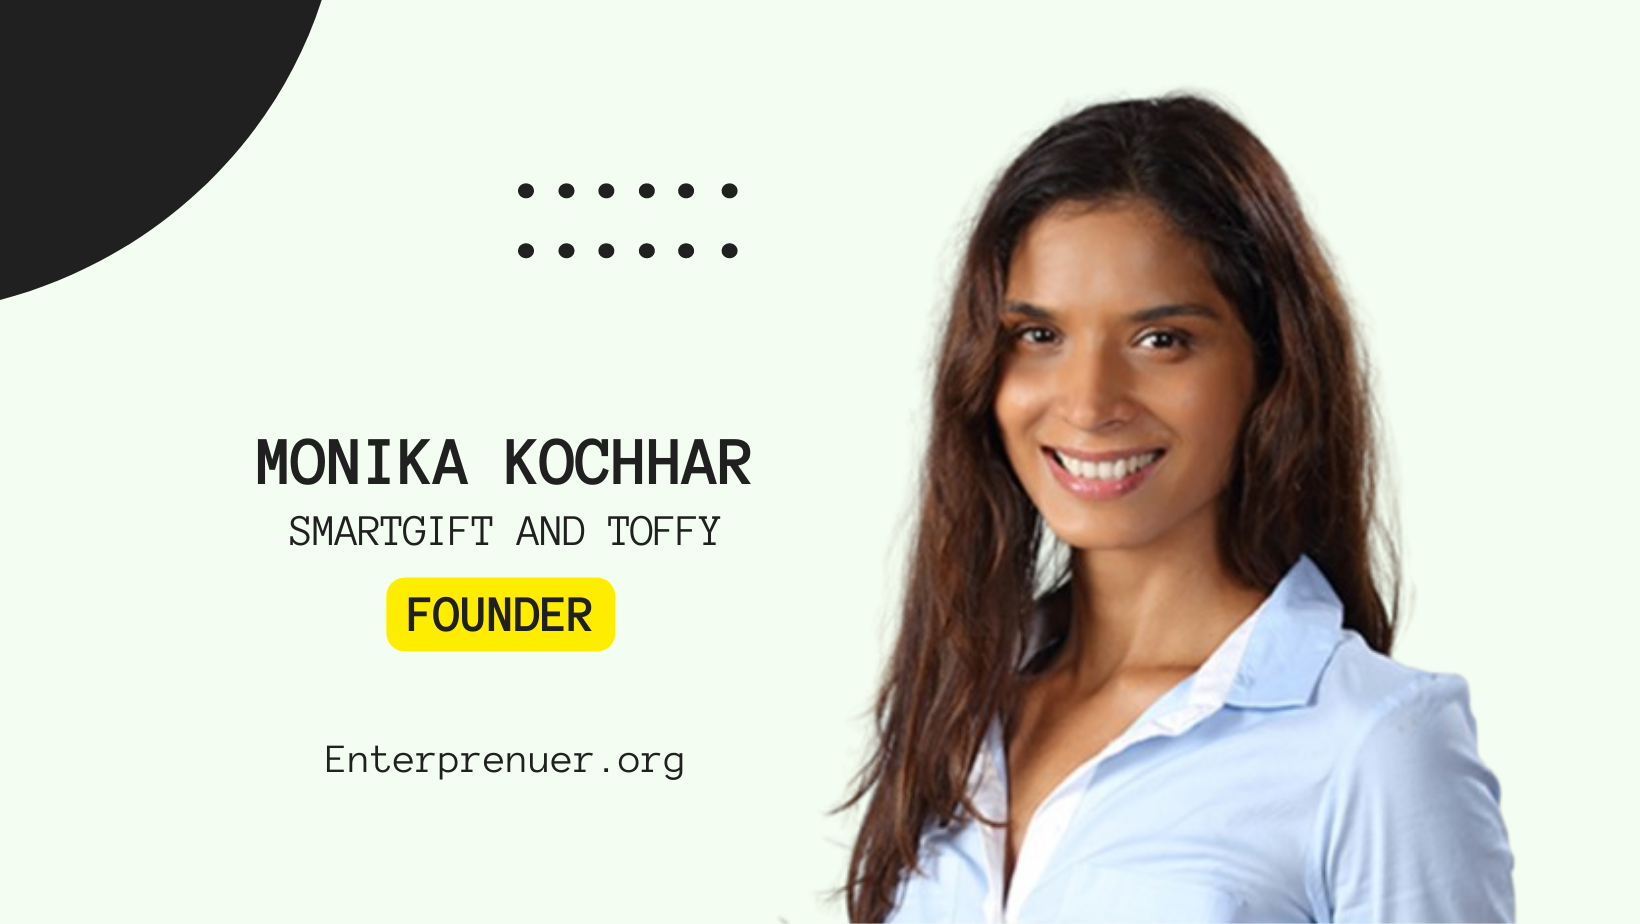 Monika Kochhar Founder of SmartGift and Toffy